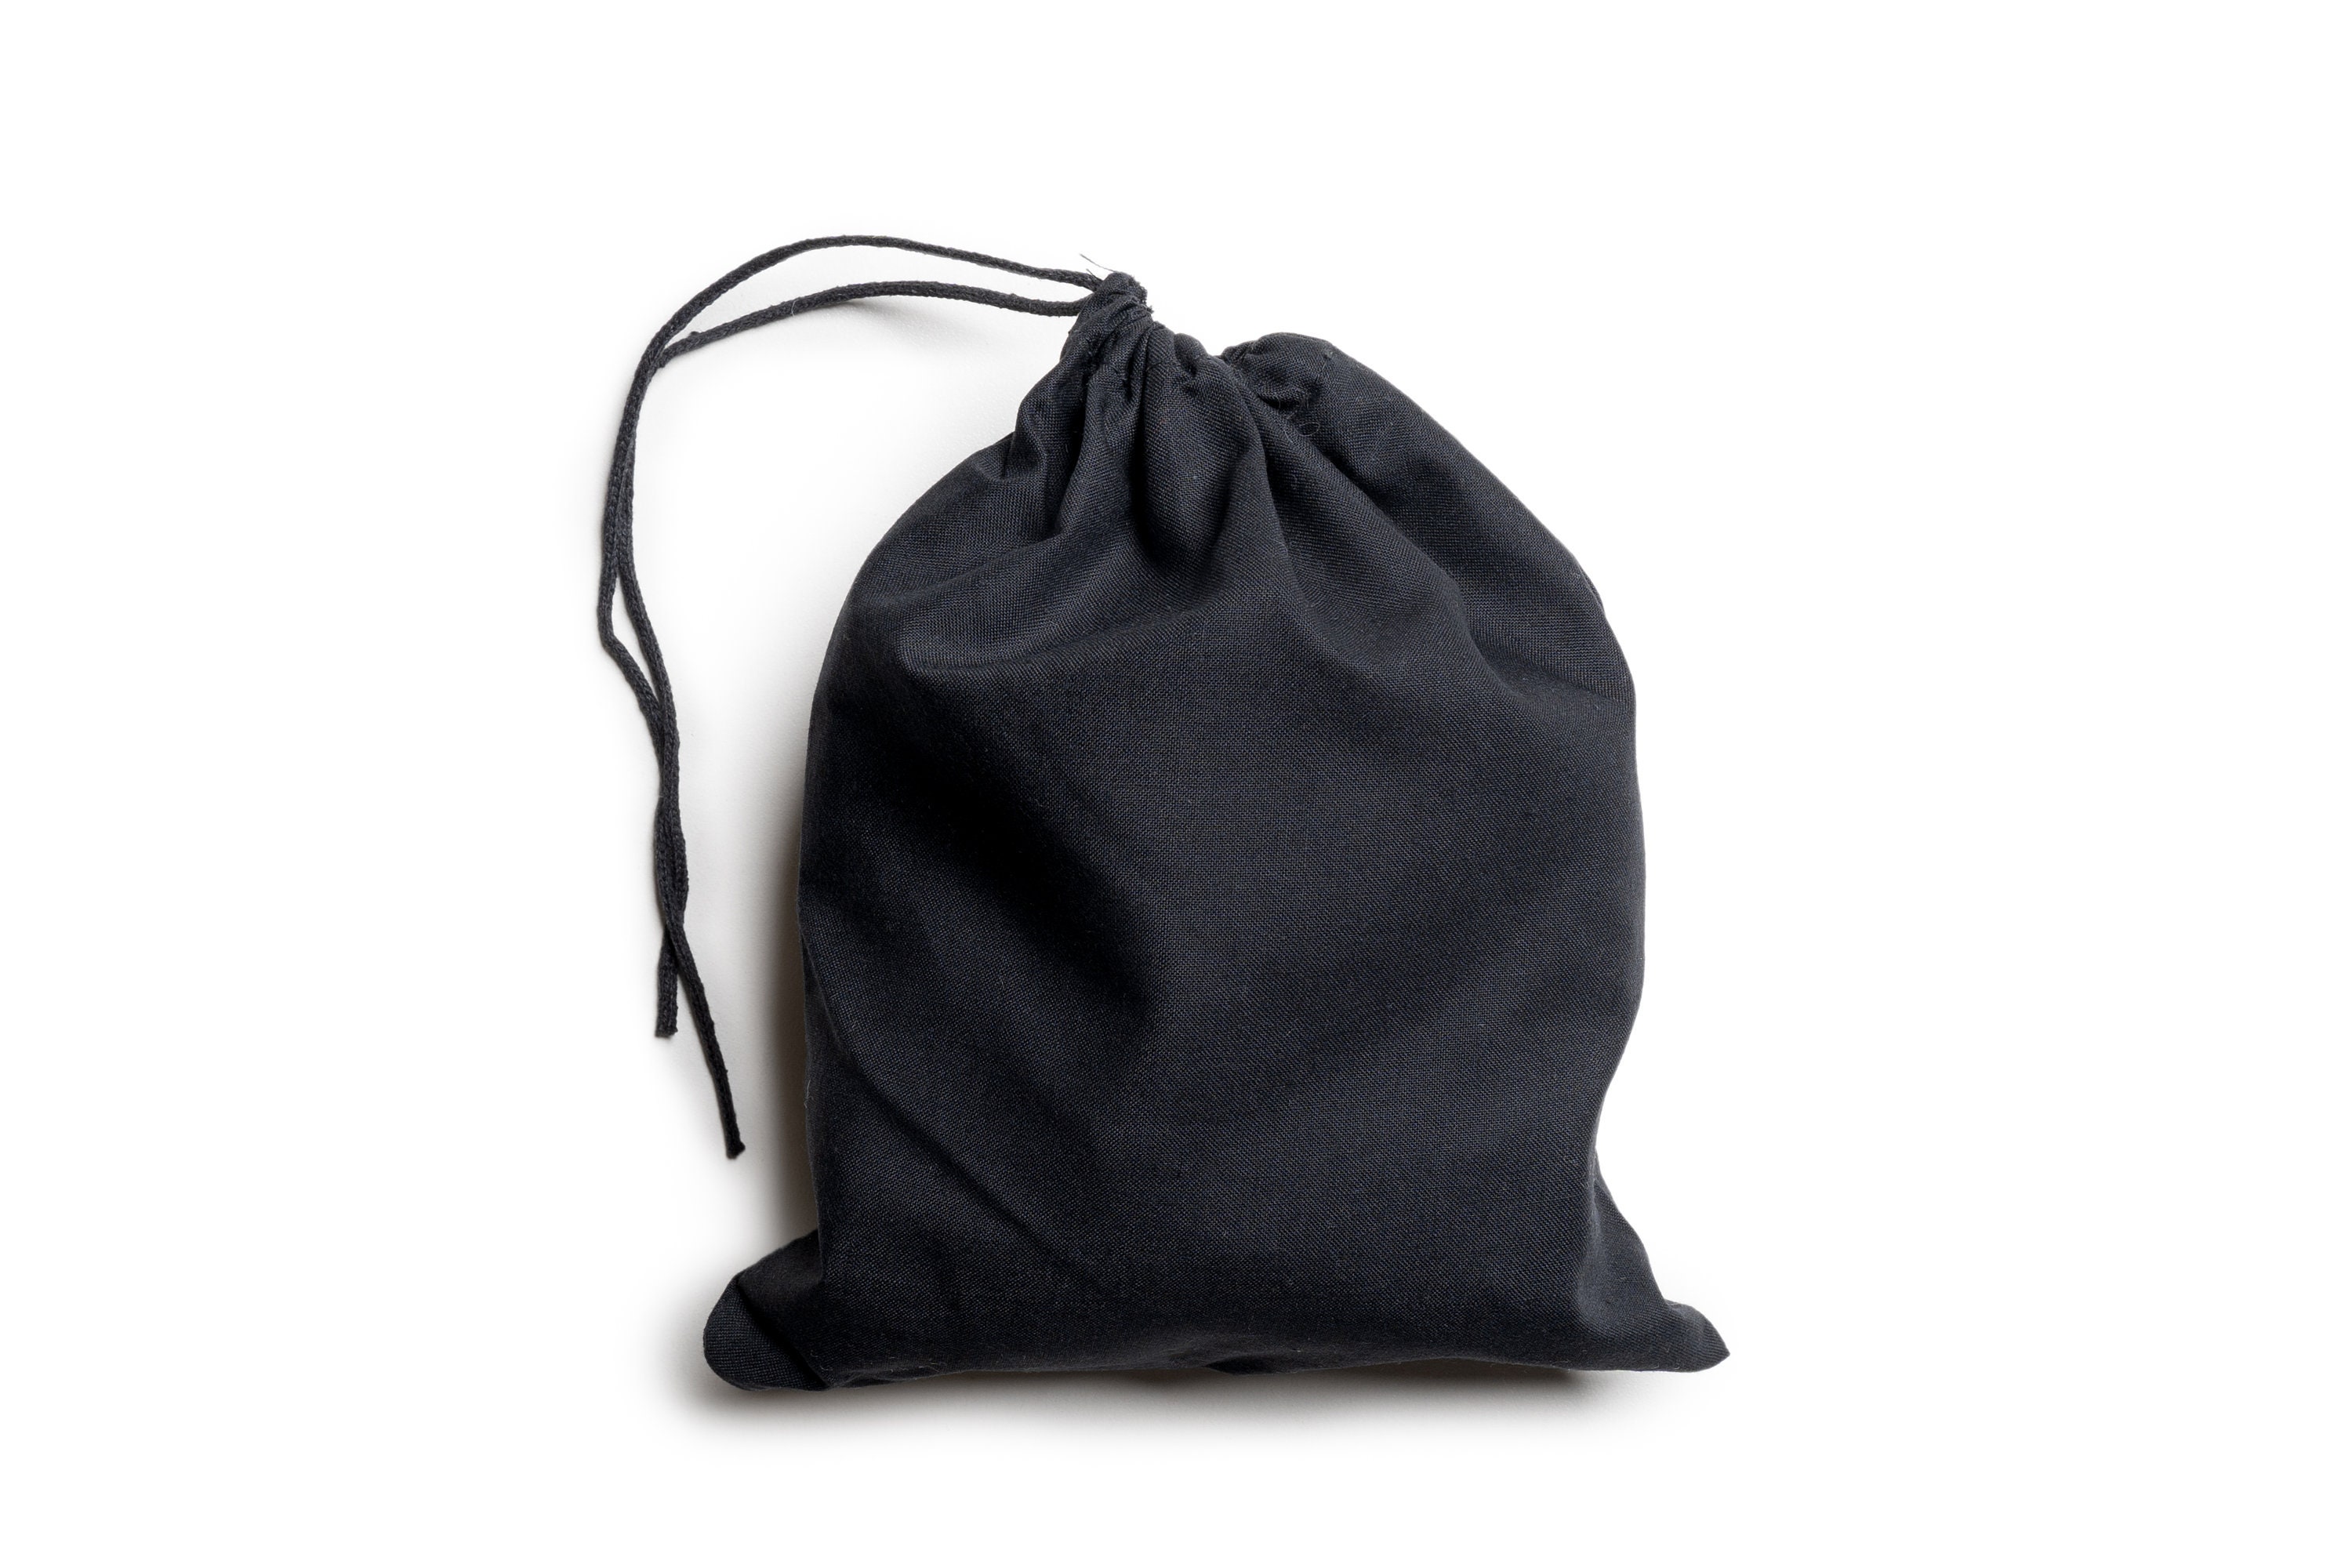 100 Durable Handbag Purse Dust Bag Cotton Canvas Bags 